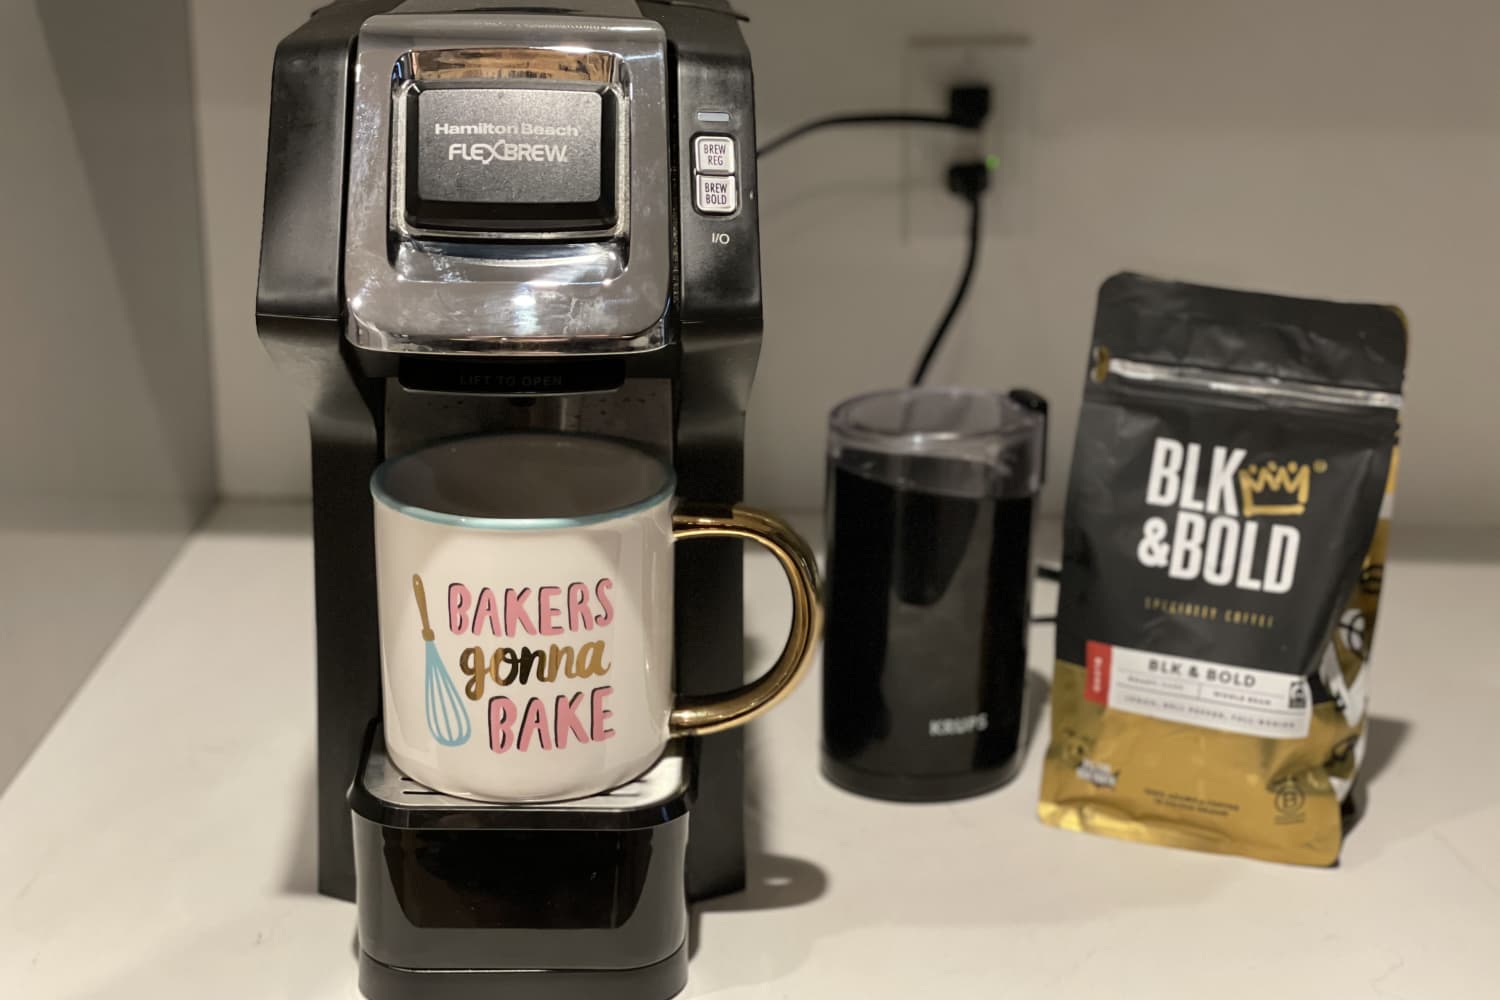 Hamilton Beach FlexBrew Single Serve Coffee Maker